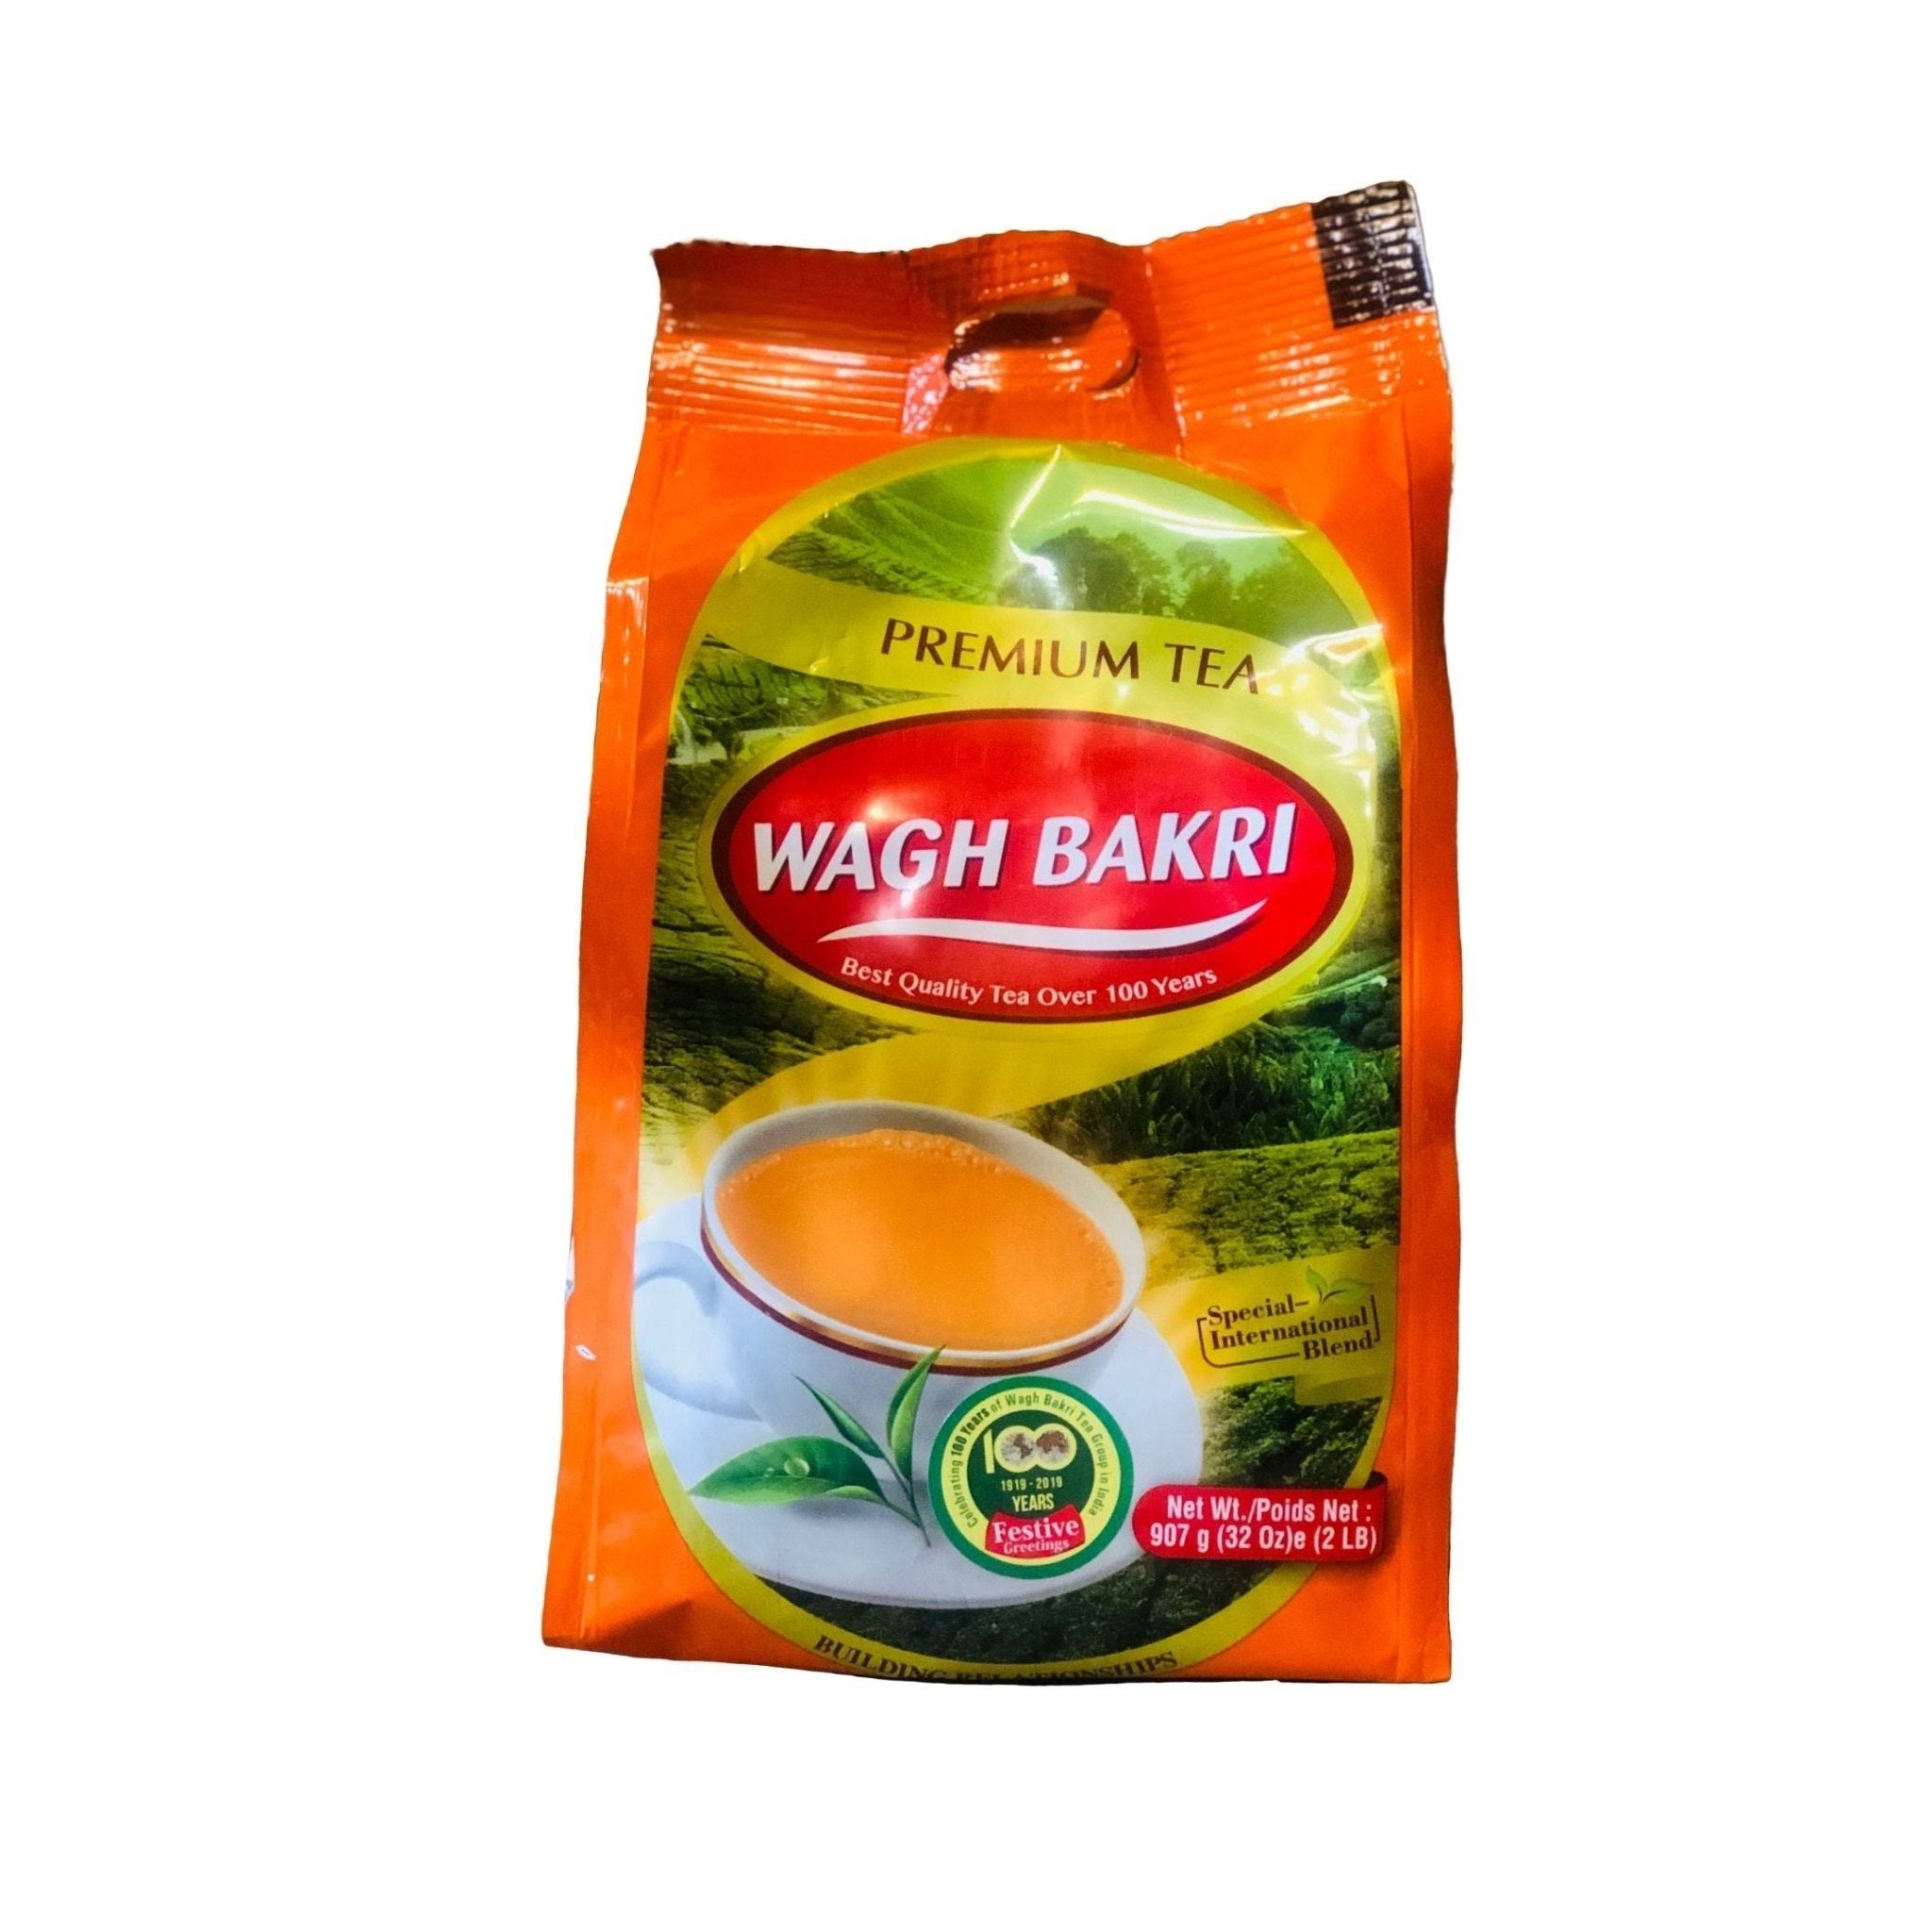 Wagh Bakri Premium Tea - 2 lb